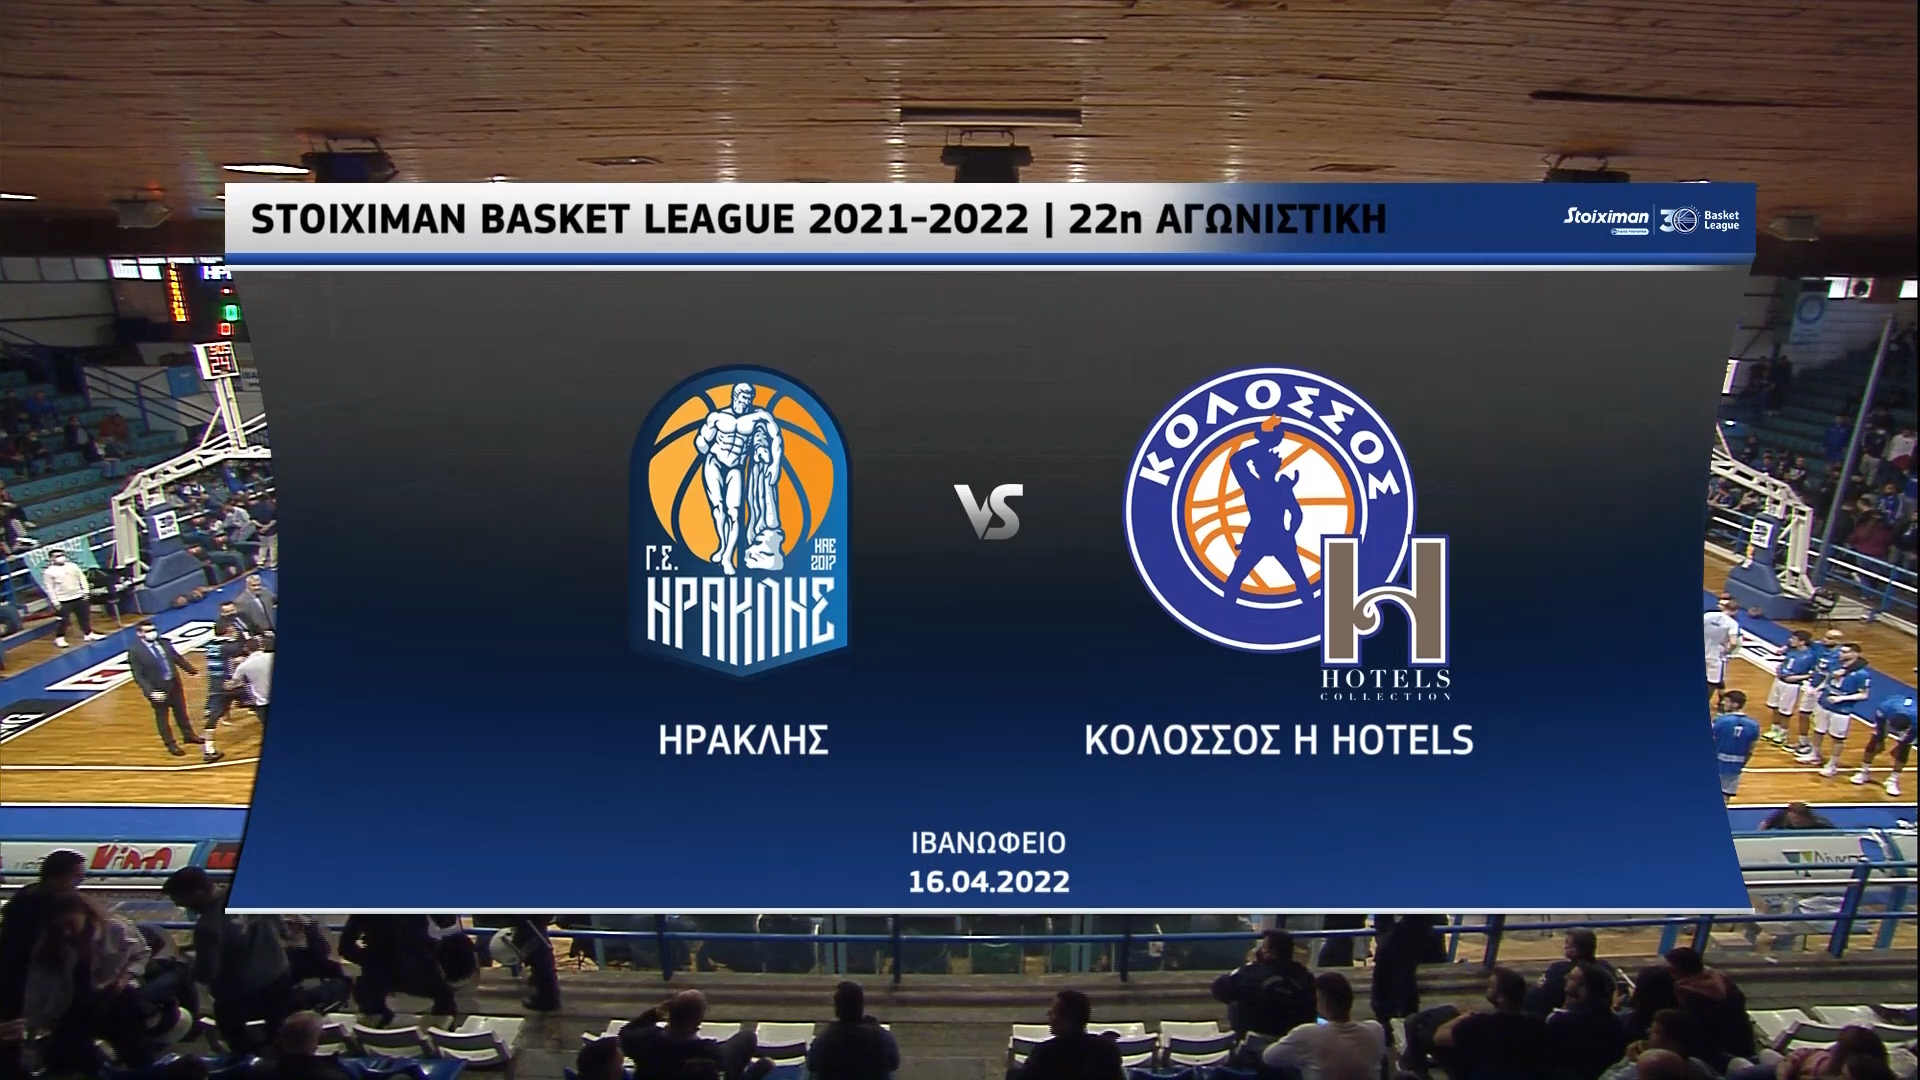 Basket League 2021 2022 | Σάββατο 16 Απριλίου 2022 – Ηρακλής – Κολοσσός